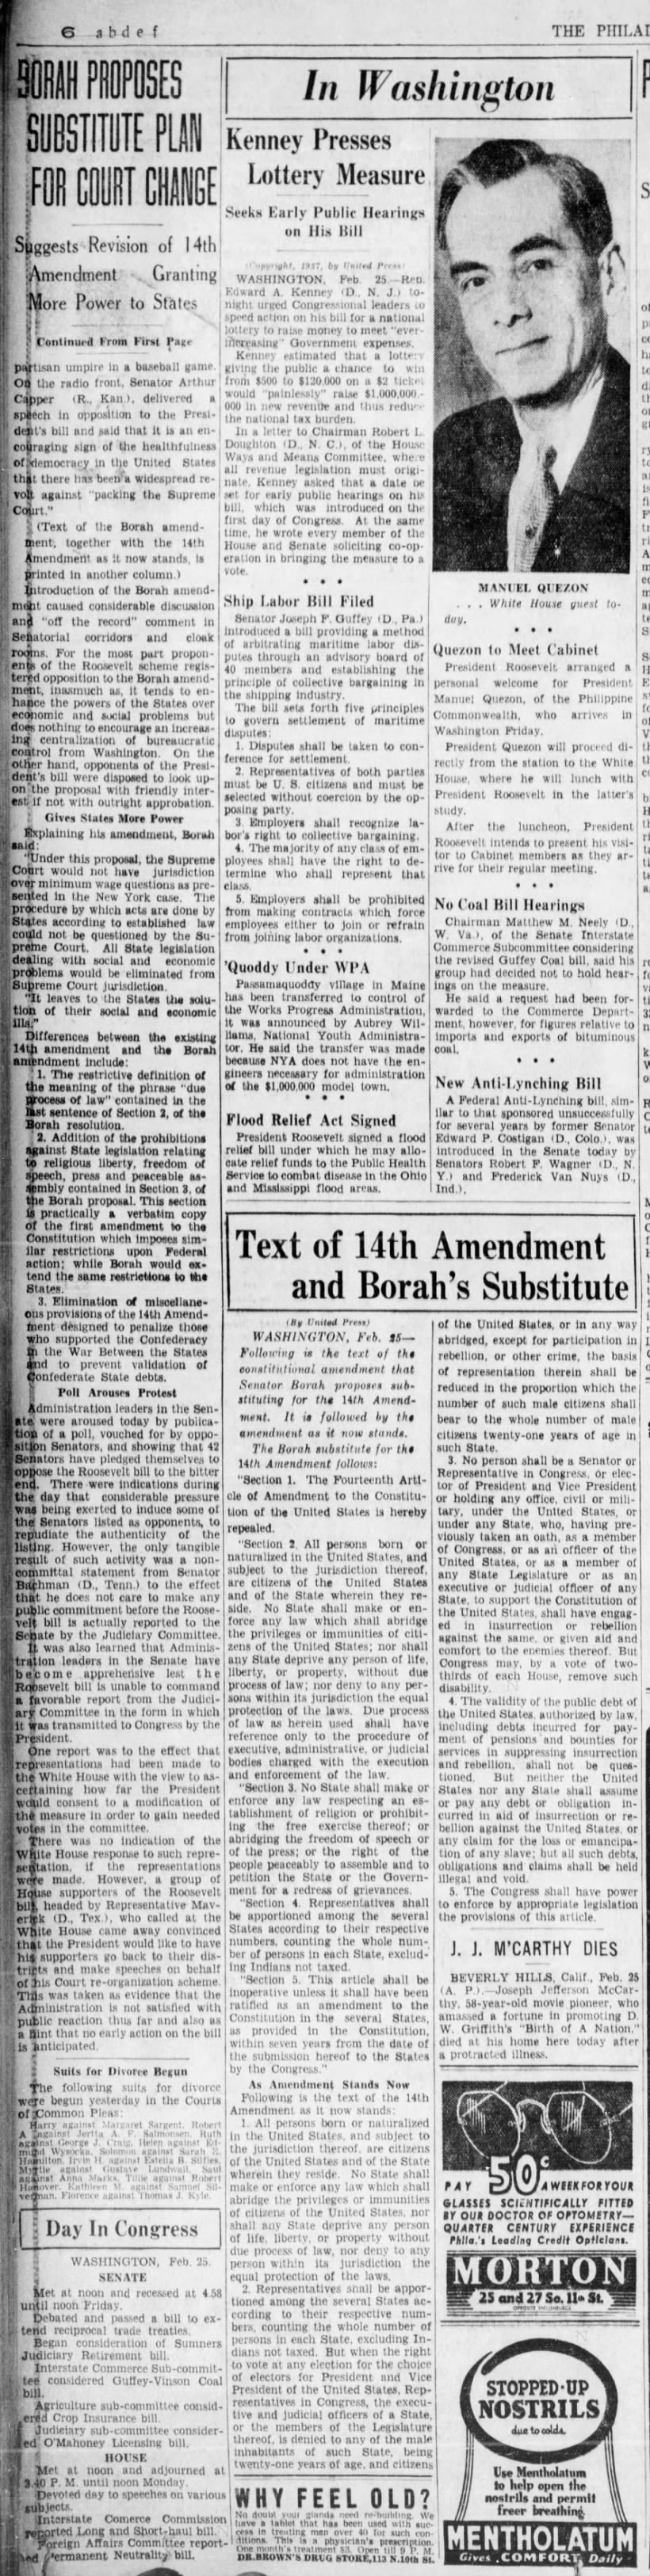 Senator Borah's Substitution for the 14th Amendment